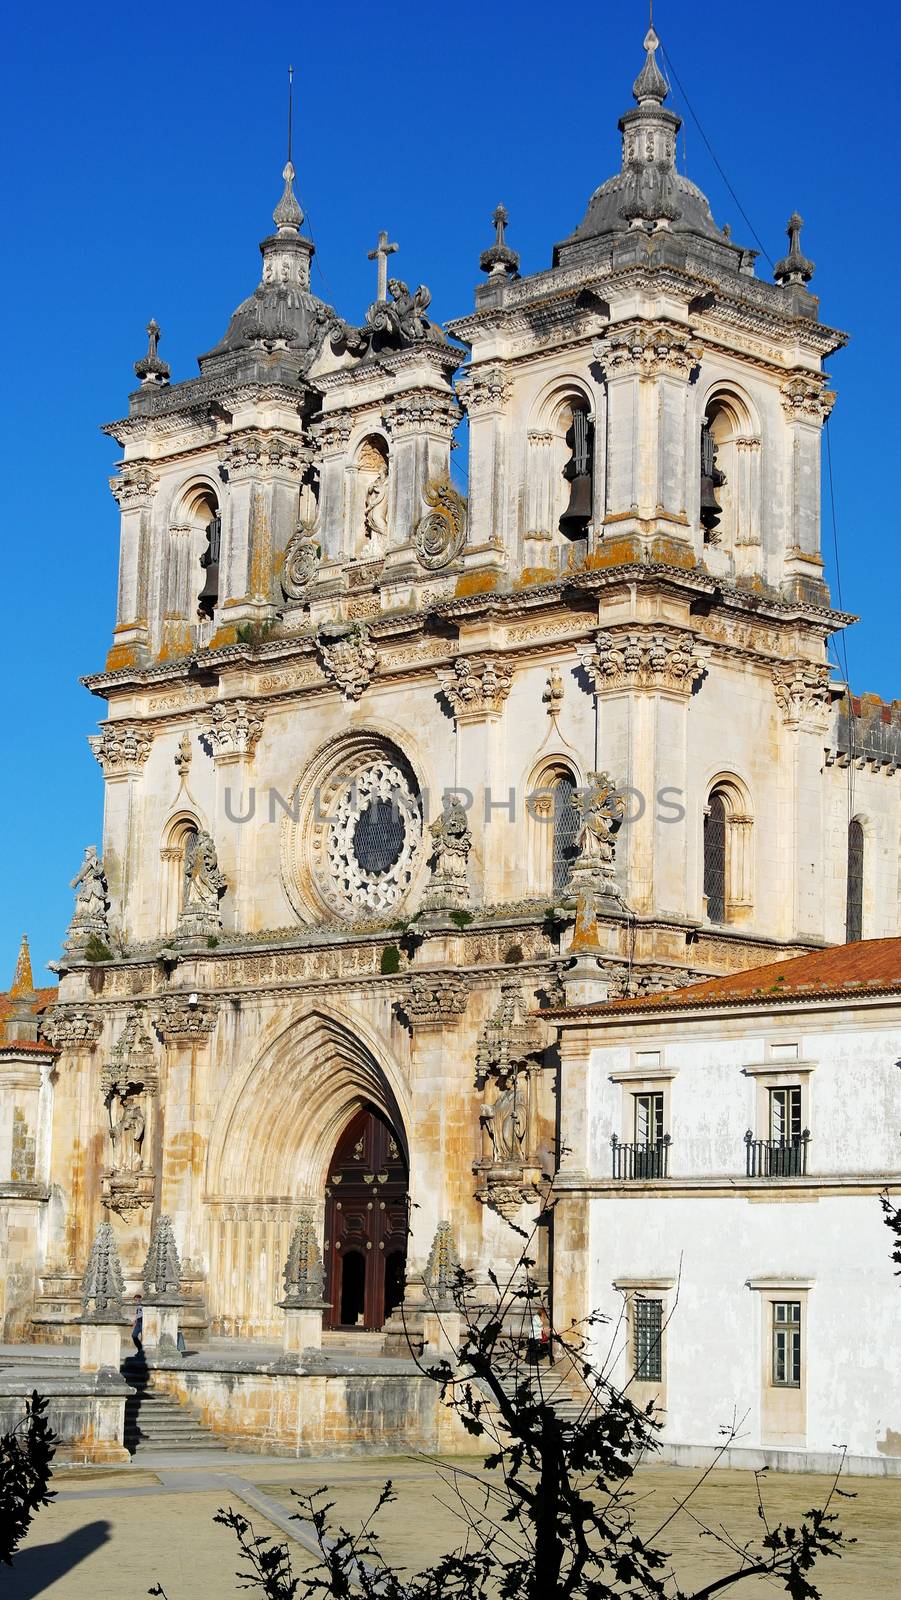 Monastery of Alcobaca, Alcobaca, Portugal